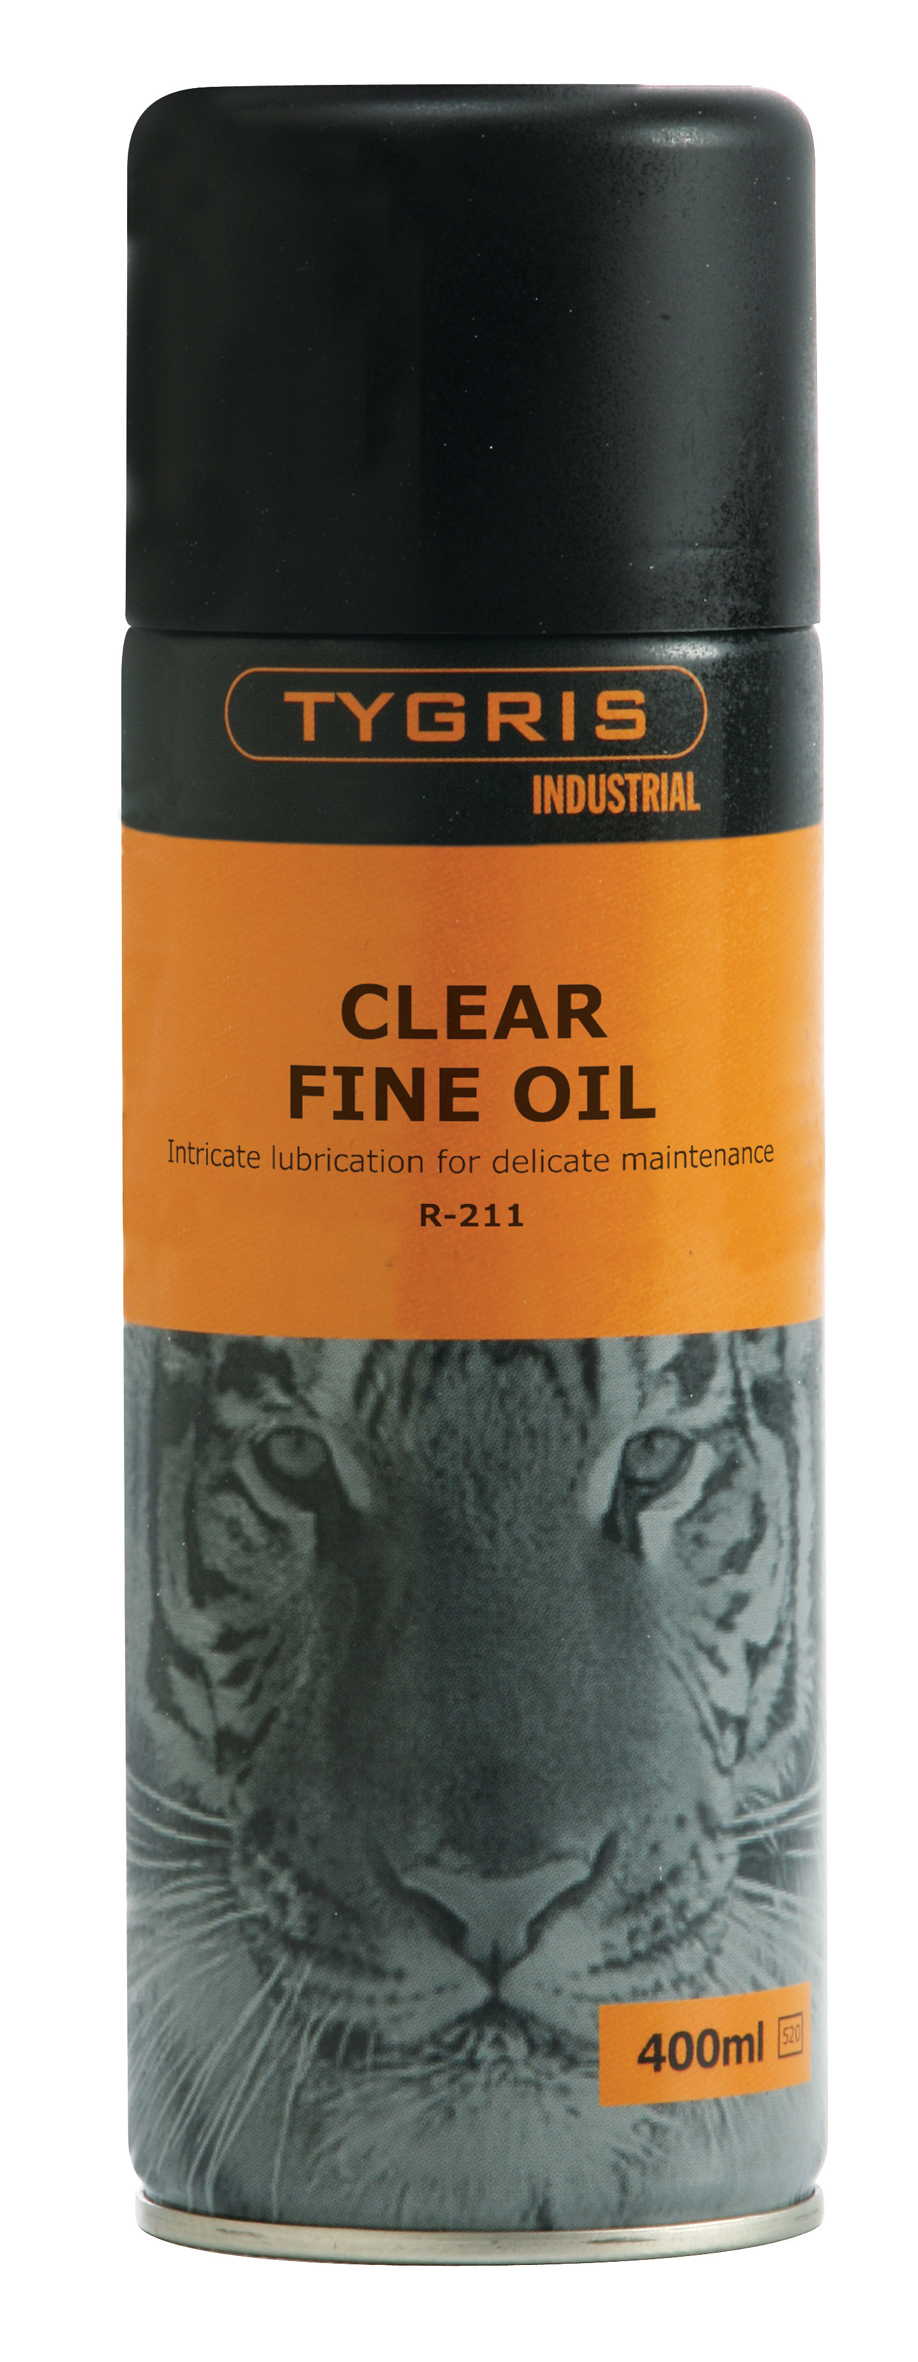 Clear Fine Oil